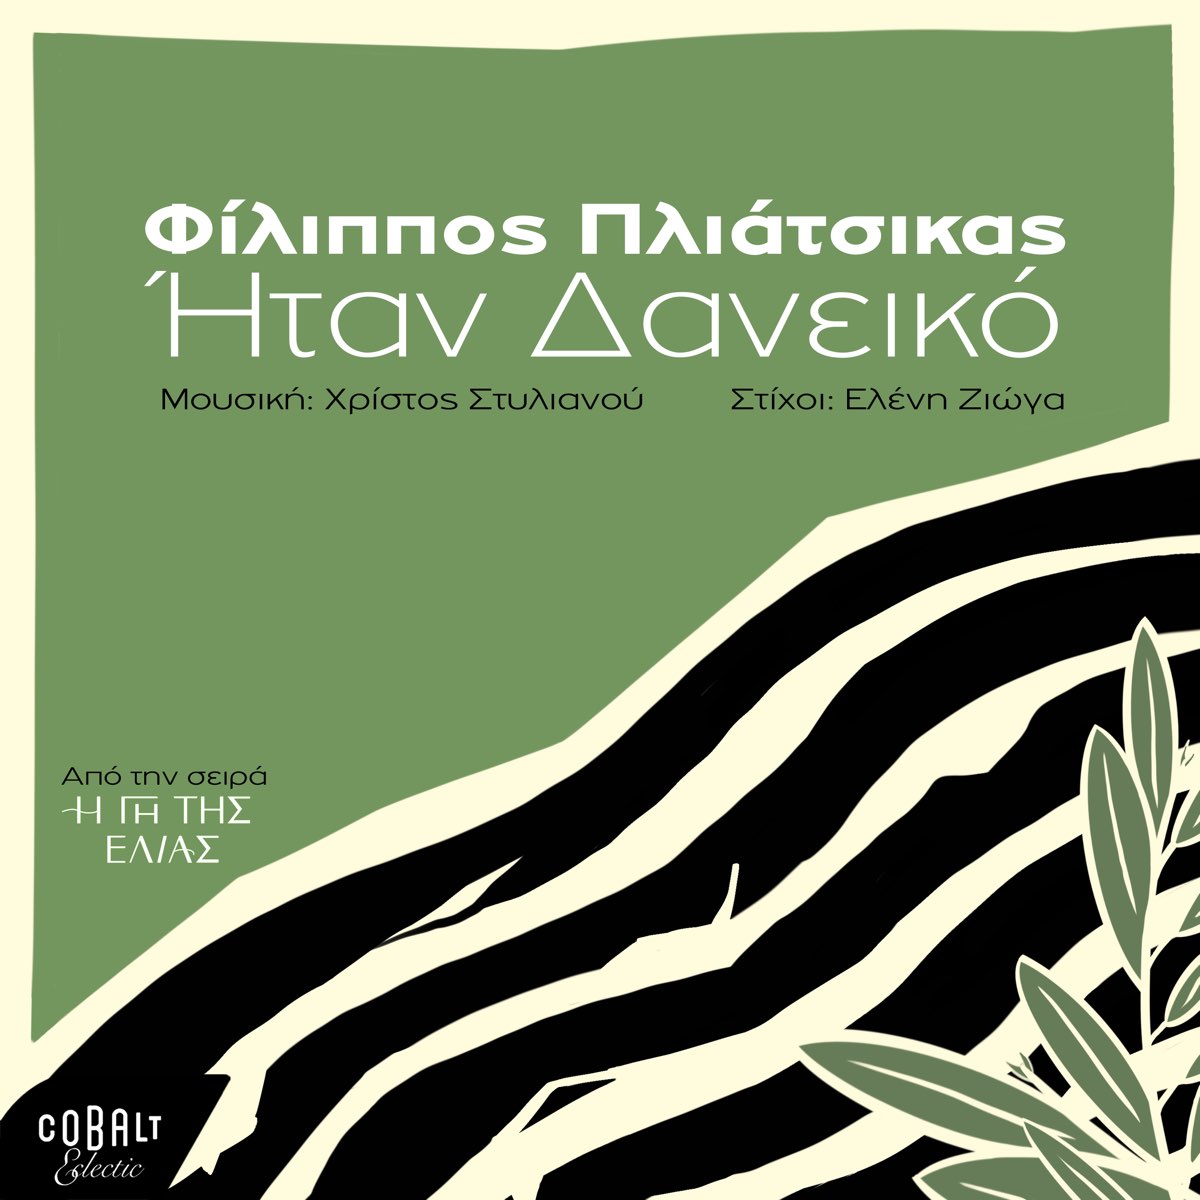 Itan Daneiko - Single - Album by Filippos Pliatsikas - Apple Music